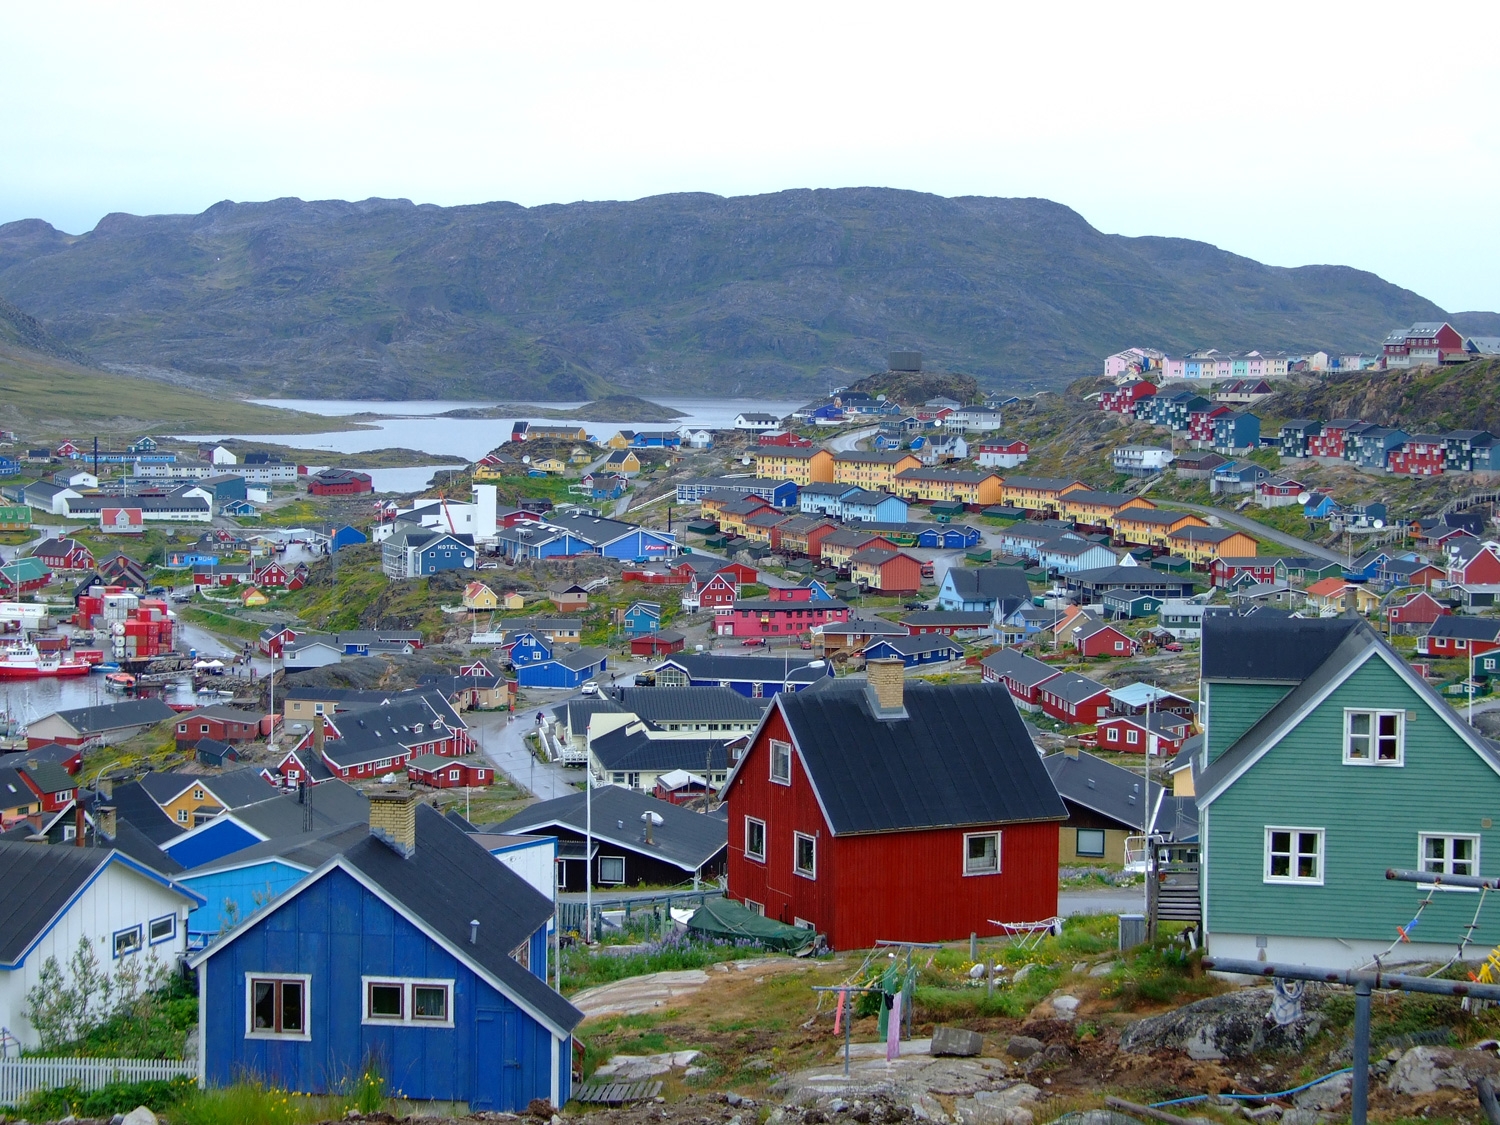 The Colorful Buildings Of Qaqortoq